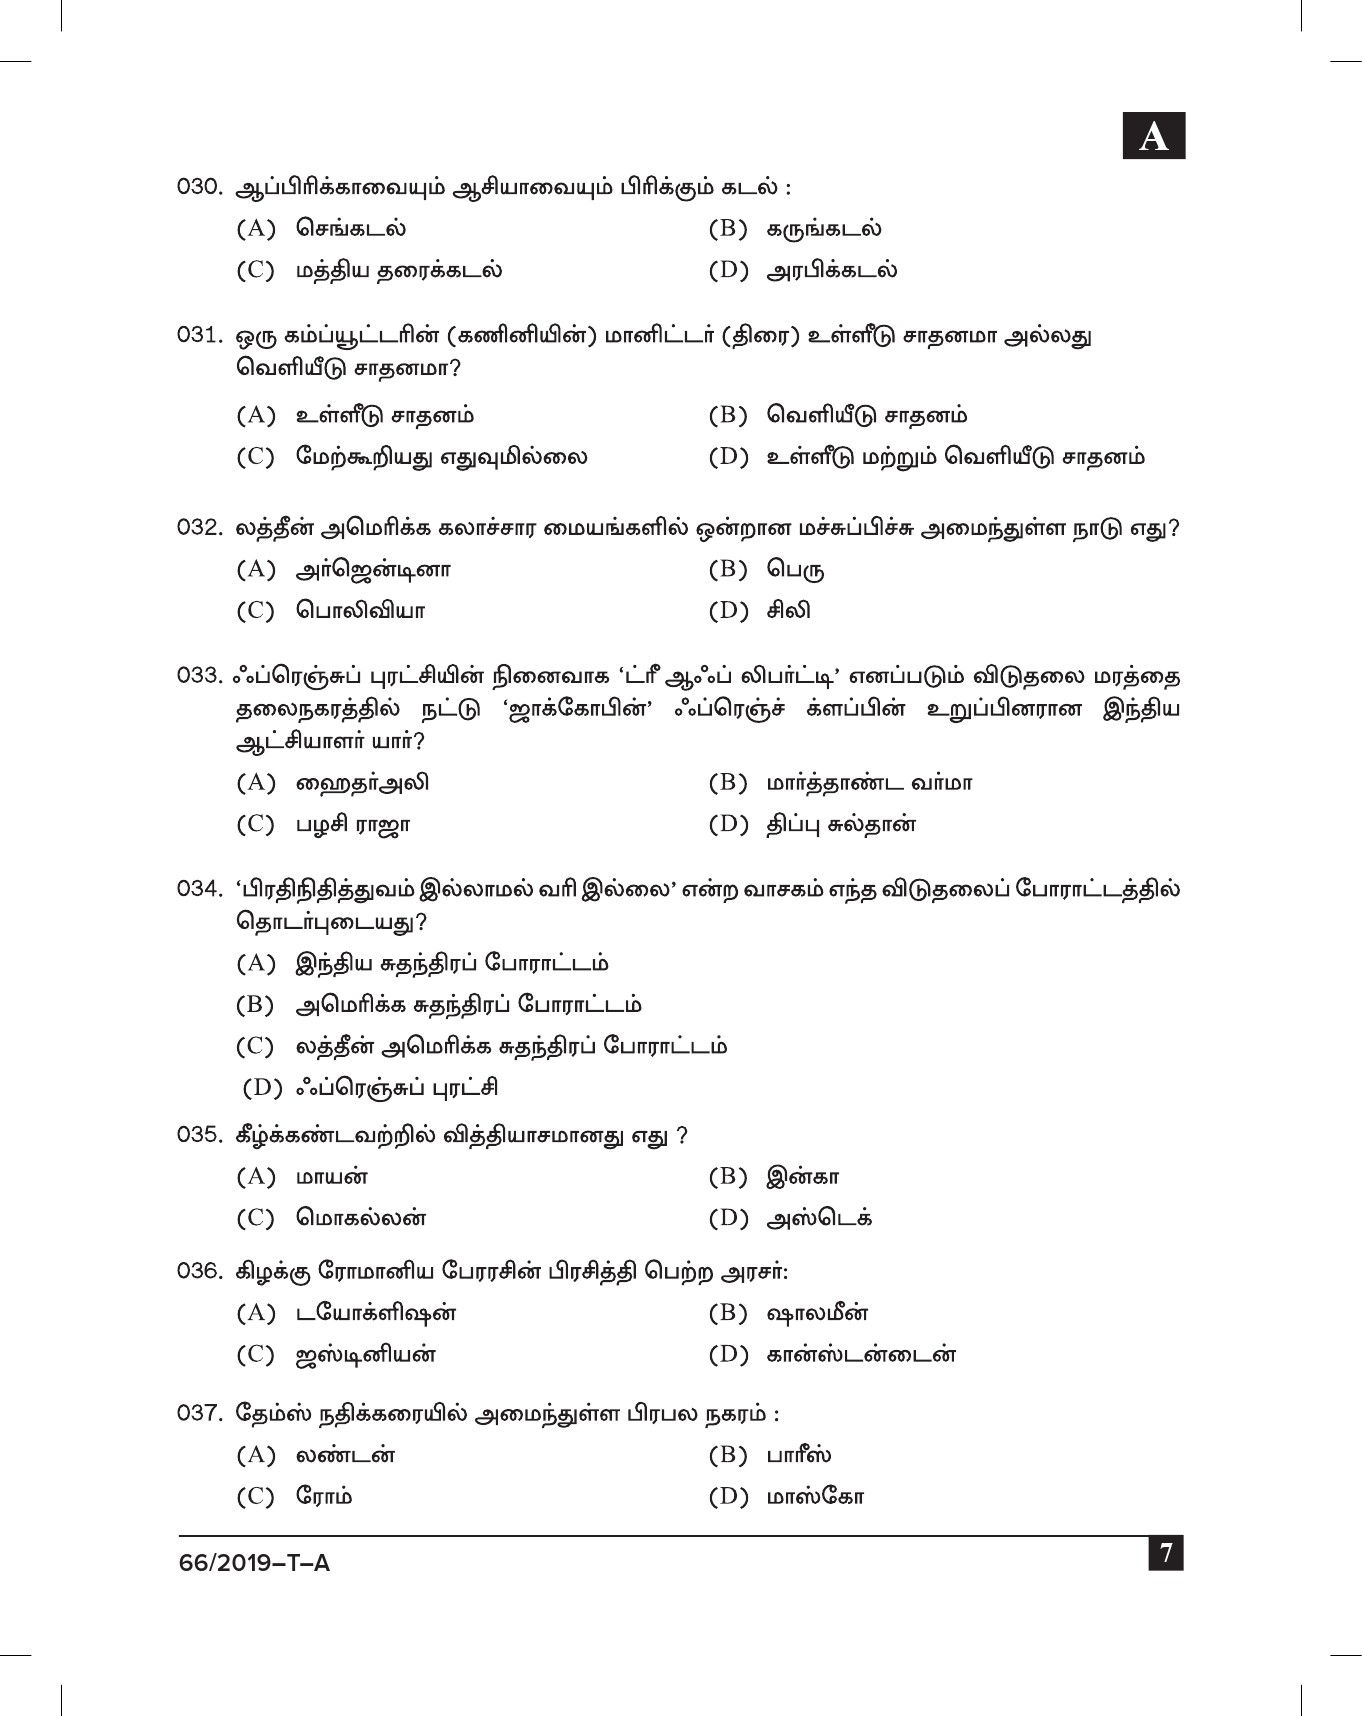 KPSC Village Extension Officer Grade II Exam Question Paper 662019 T A 6